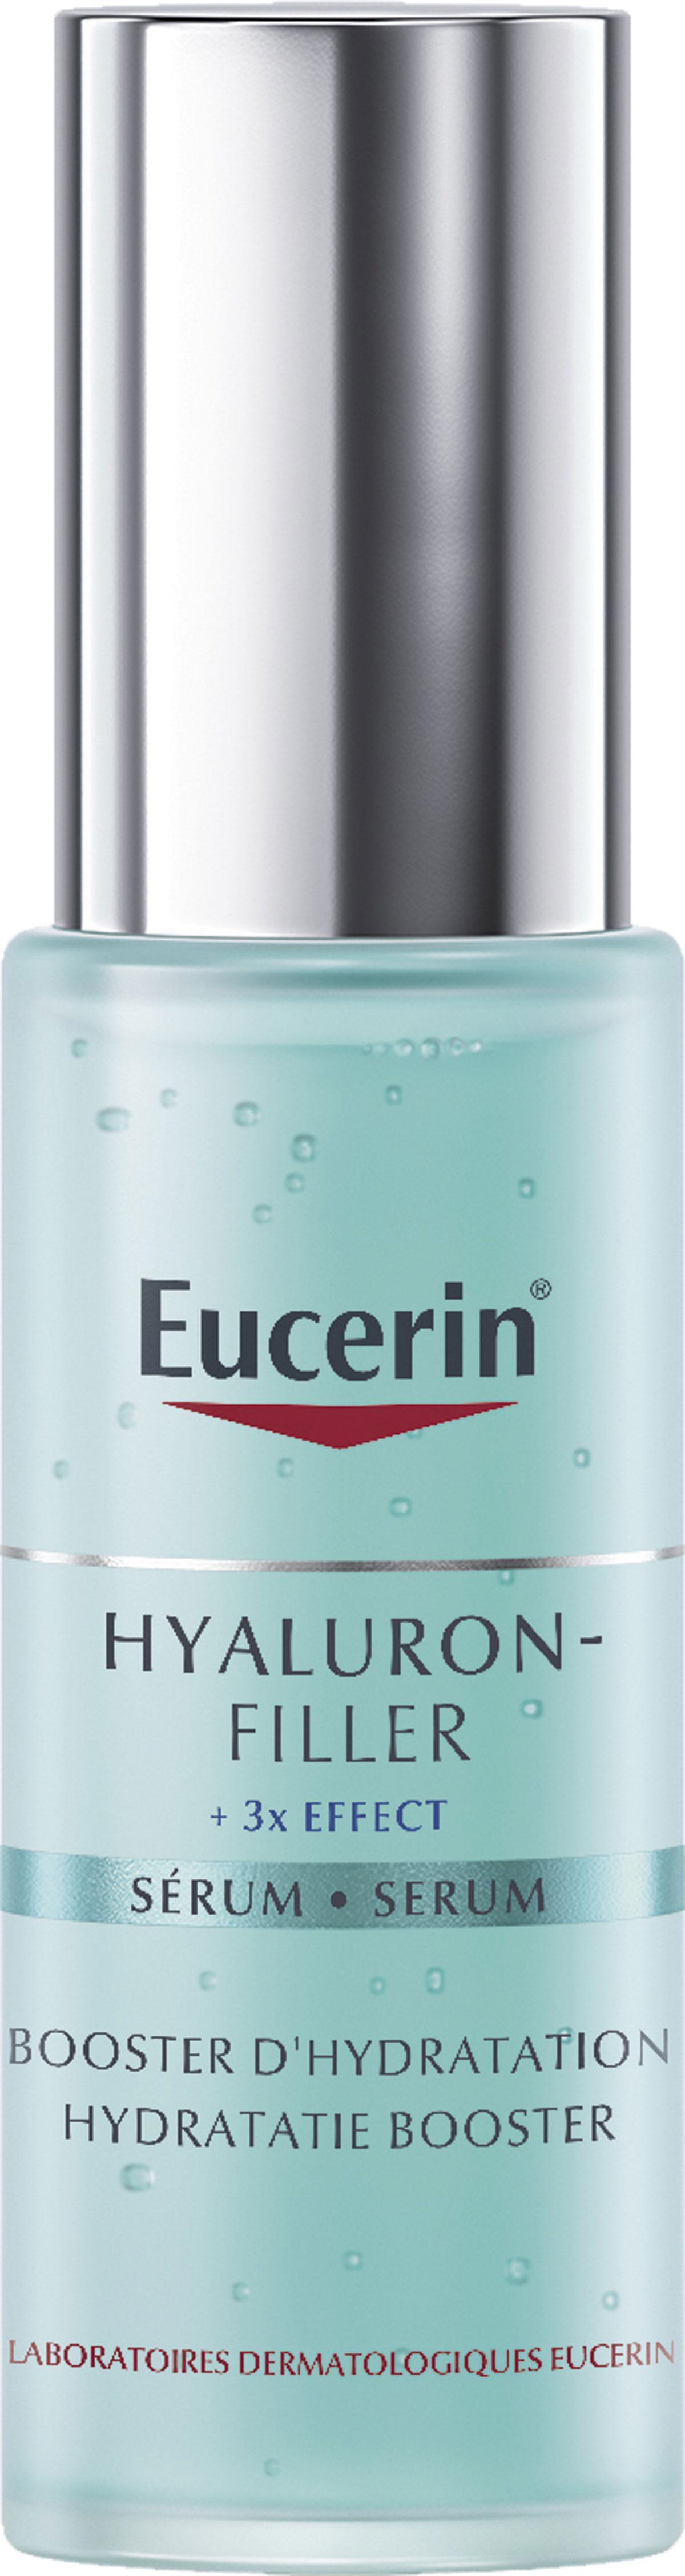 1. Sérum booster d’hydratation Hyaluron-Filler + 3 x Effect, Eucerin, 27,95 euros les 30 ml (disponible en pharmacie).